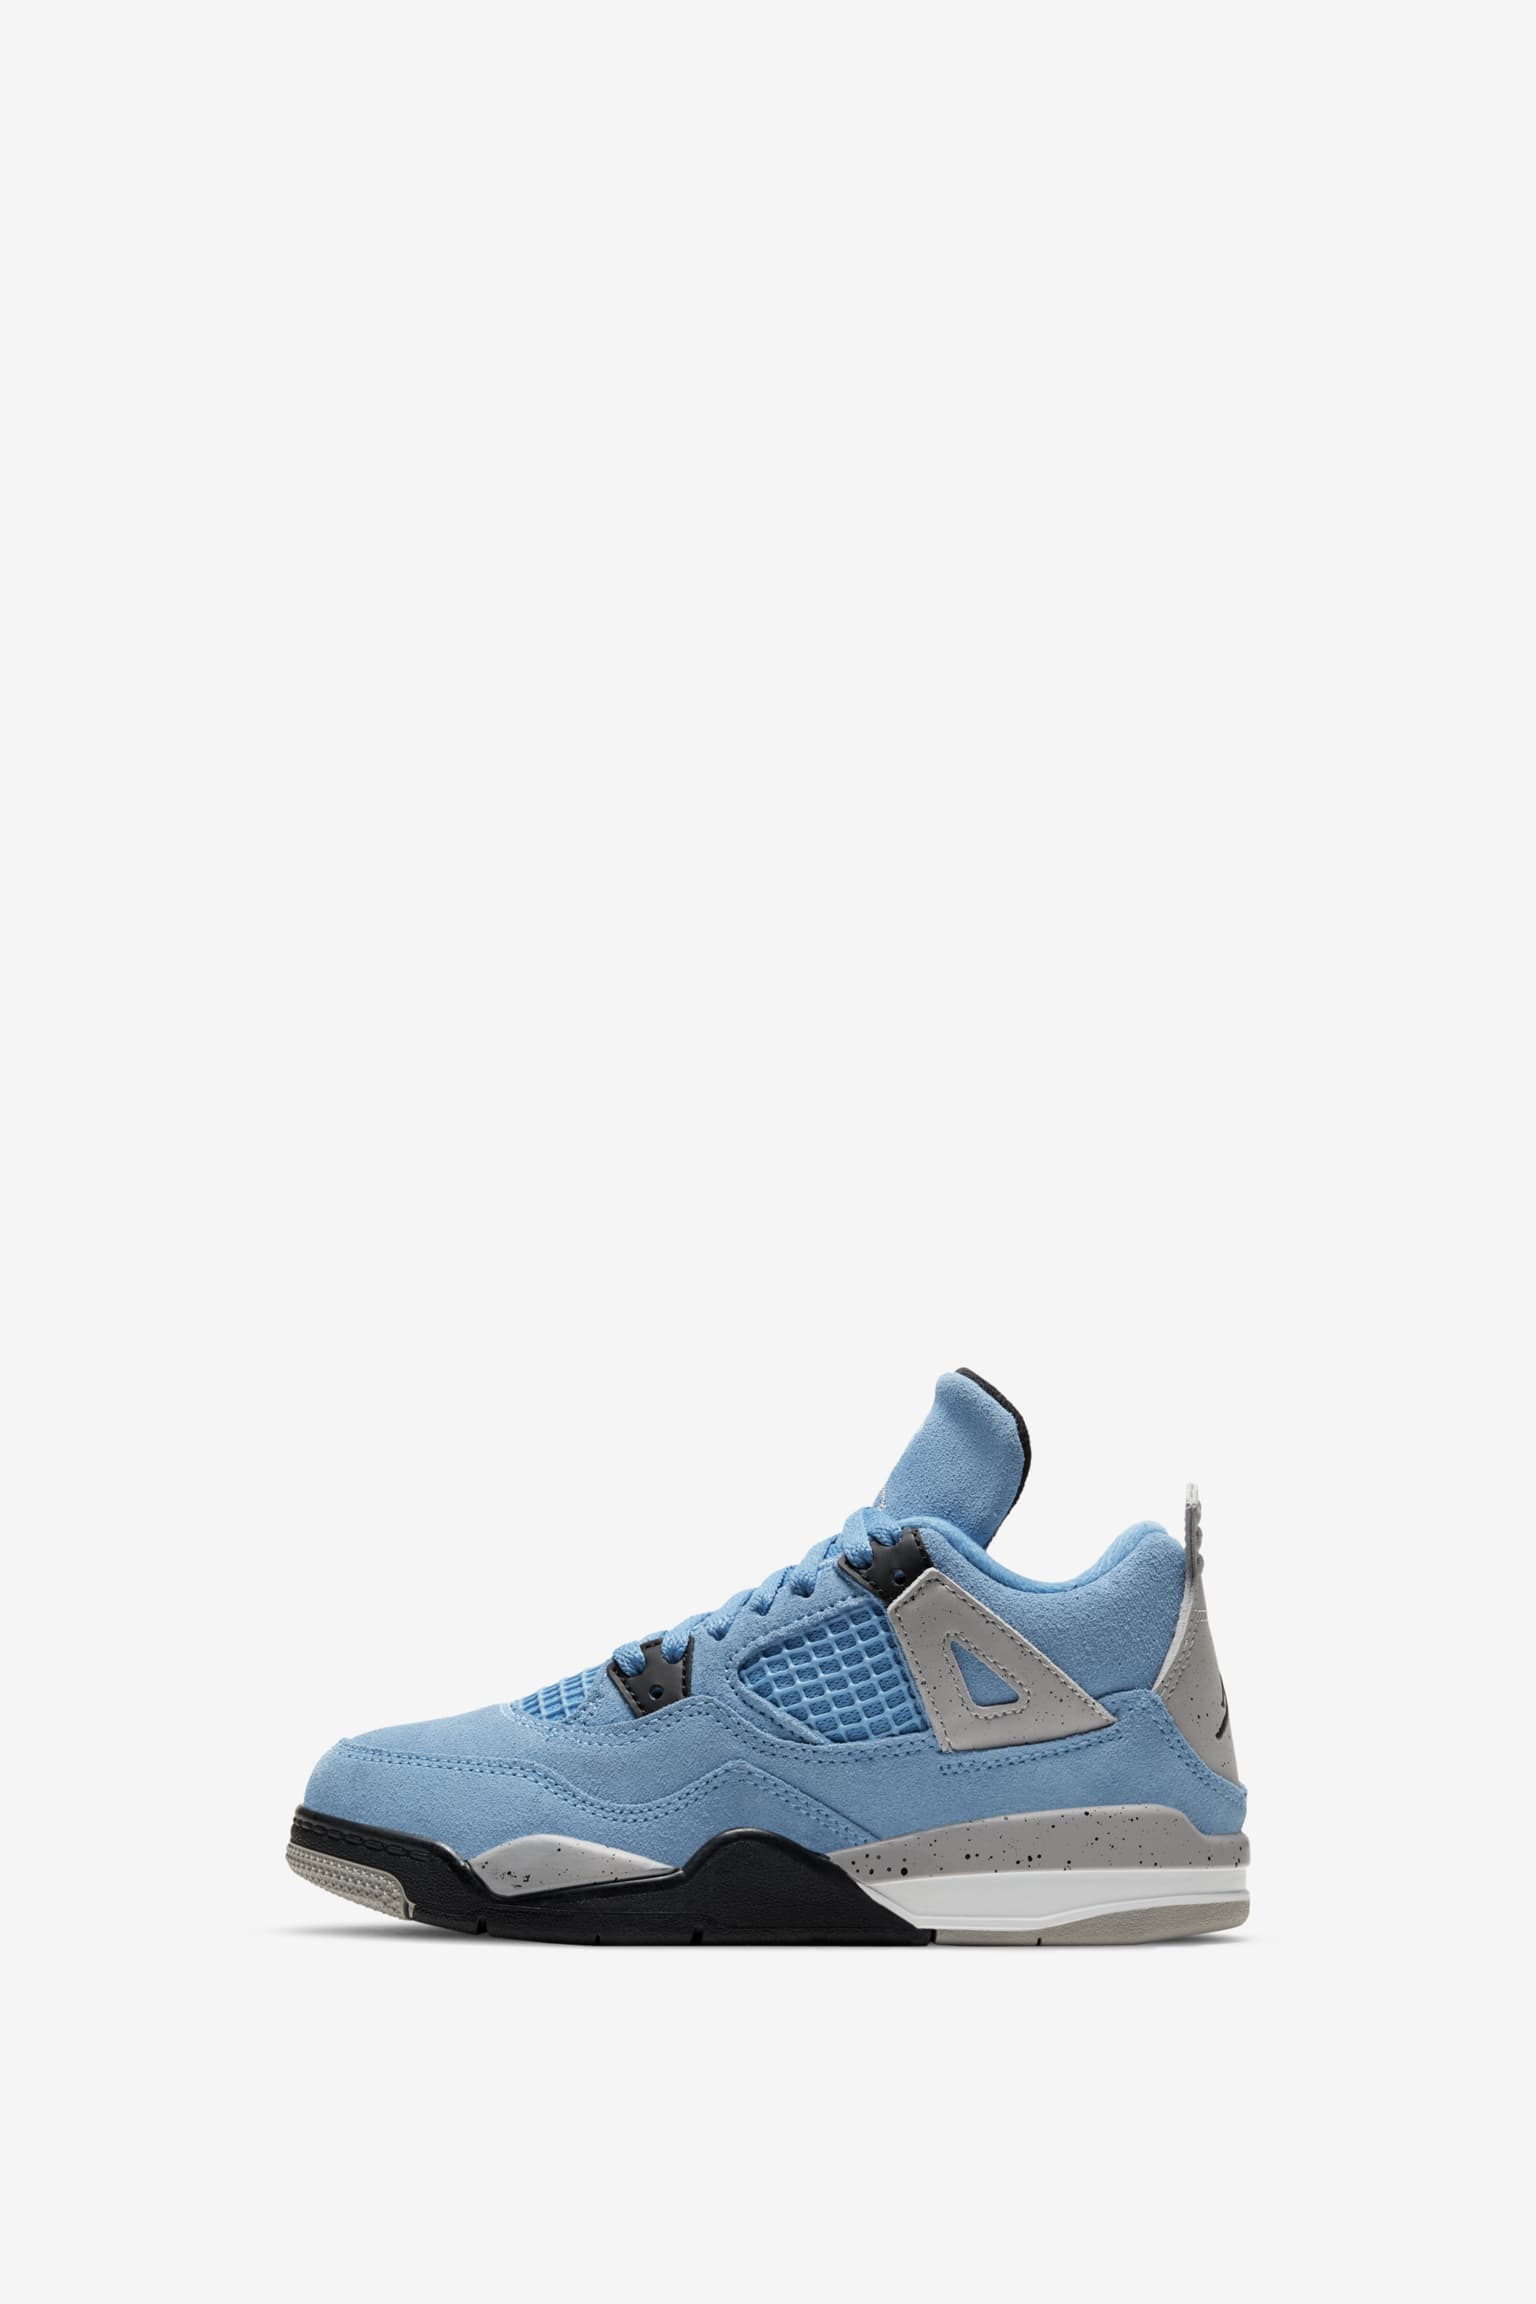 Air Jordan 4 University Blue Release Date Nike Snkrs In